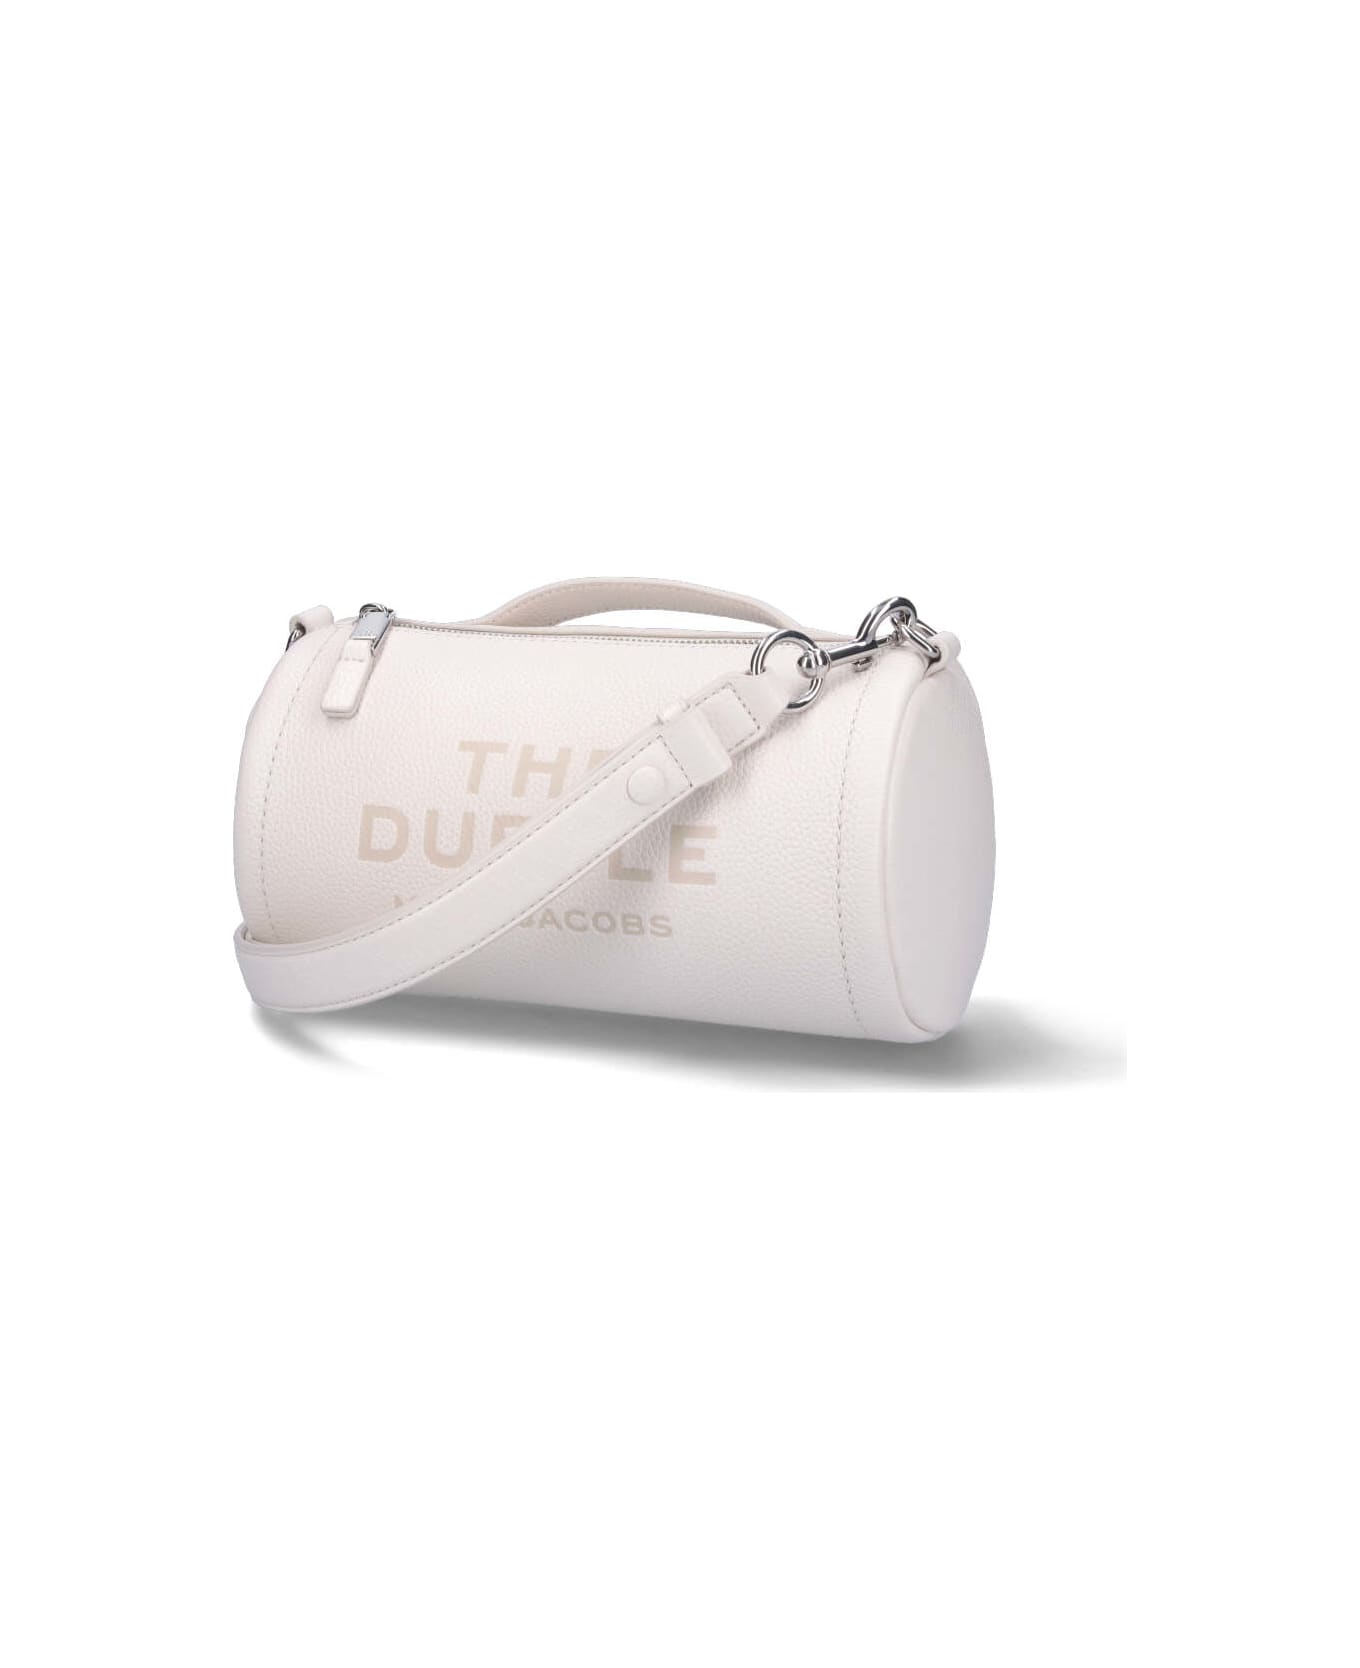 Marc Jacobs The Duffle Bag - Cream